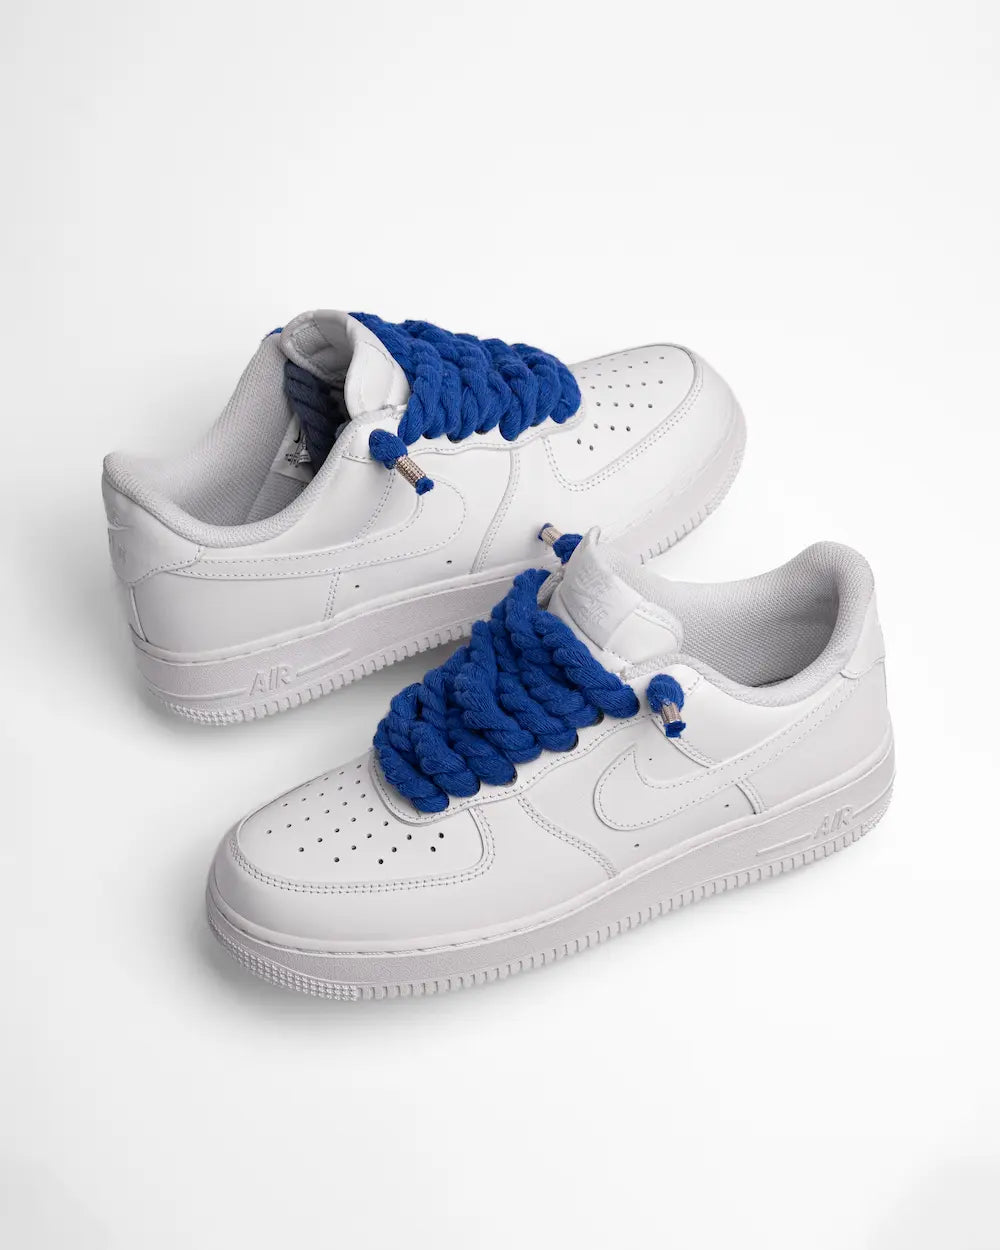 Nike Air Force 1 bianca personalizzata con lacci in corda blu